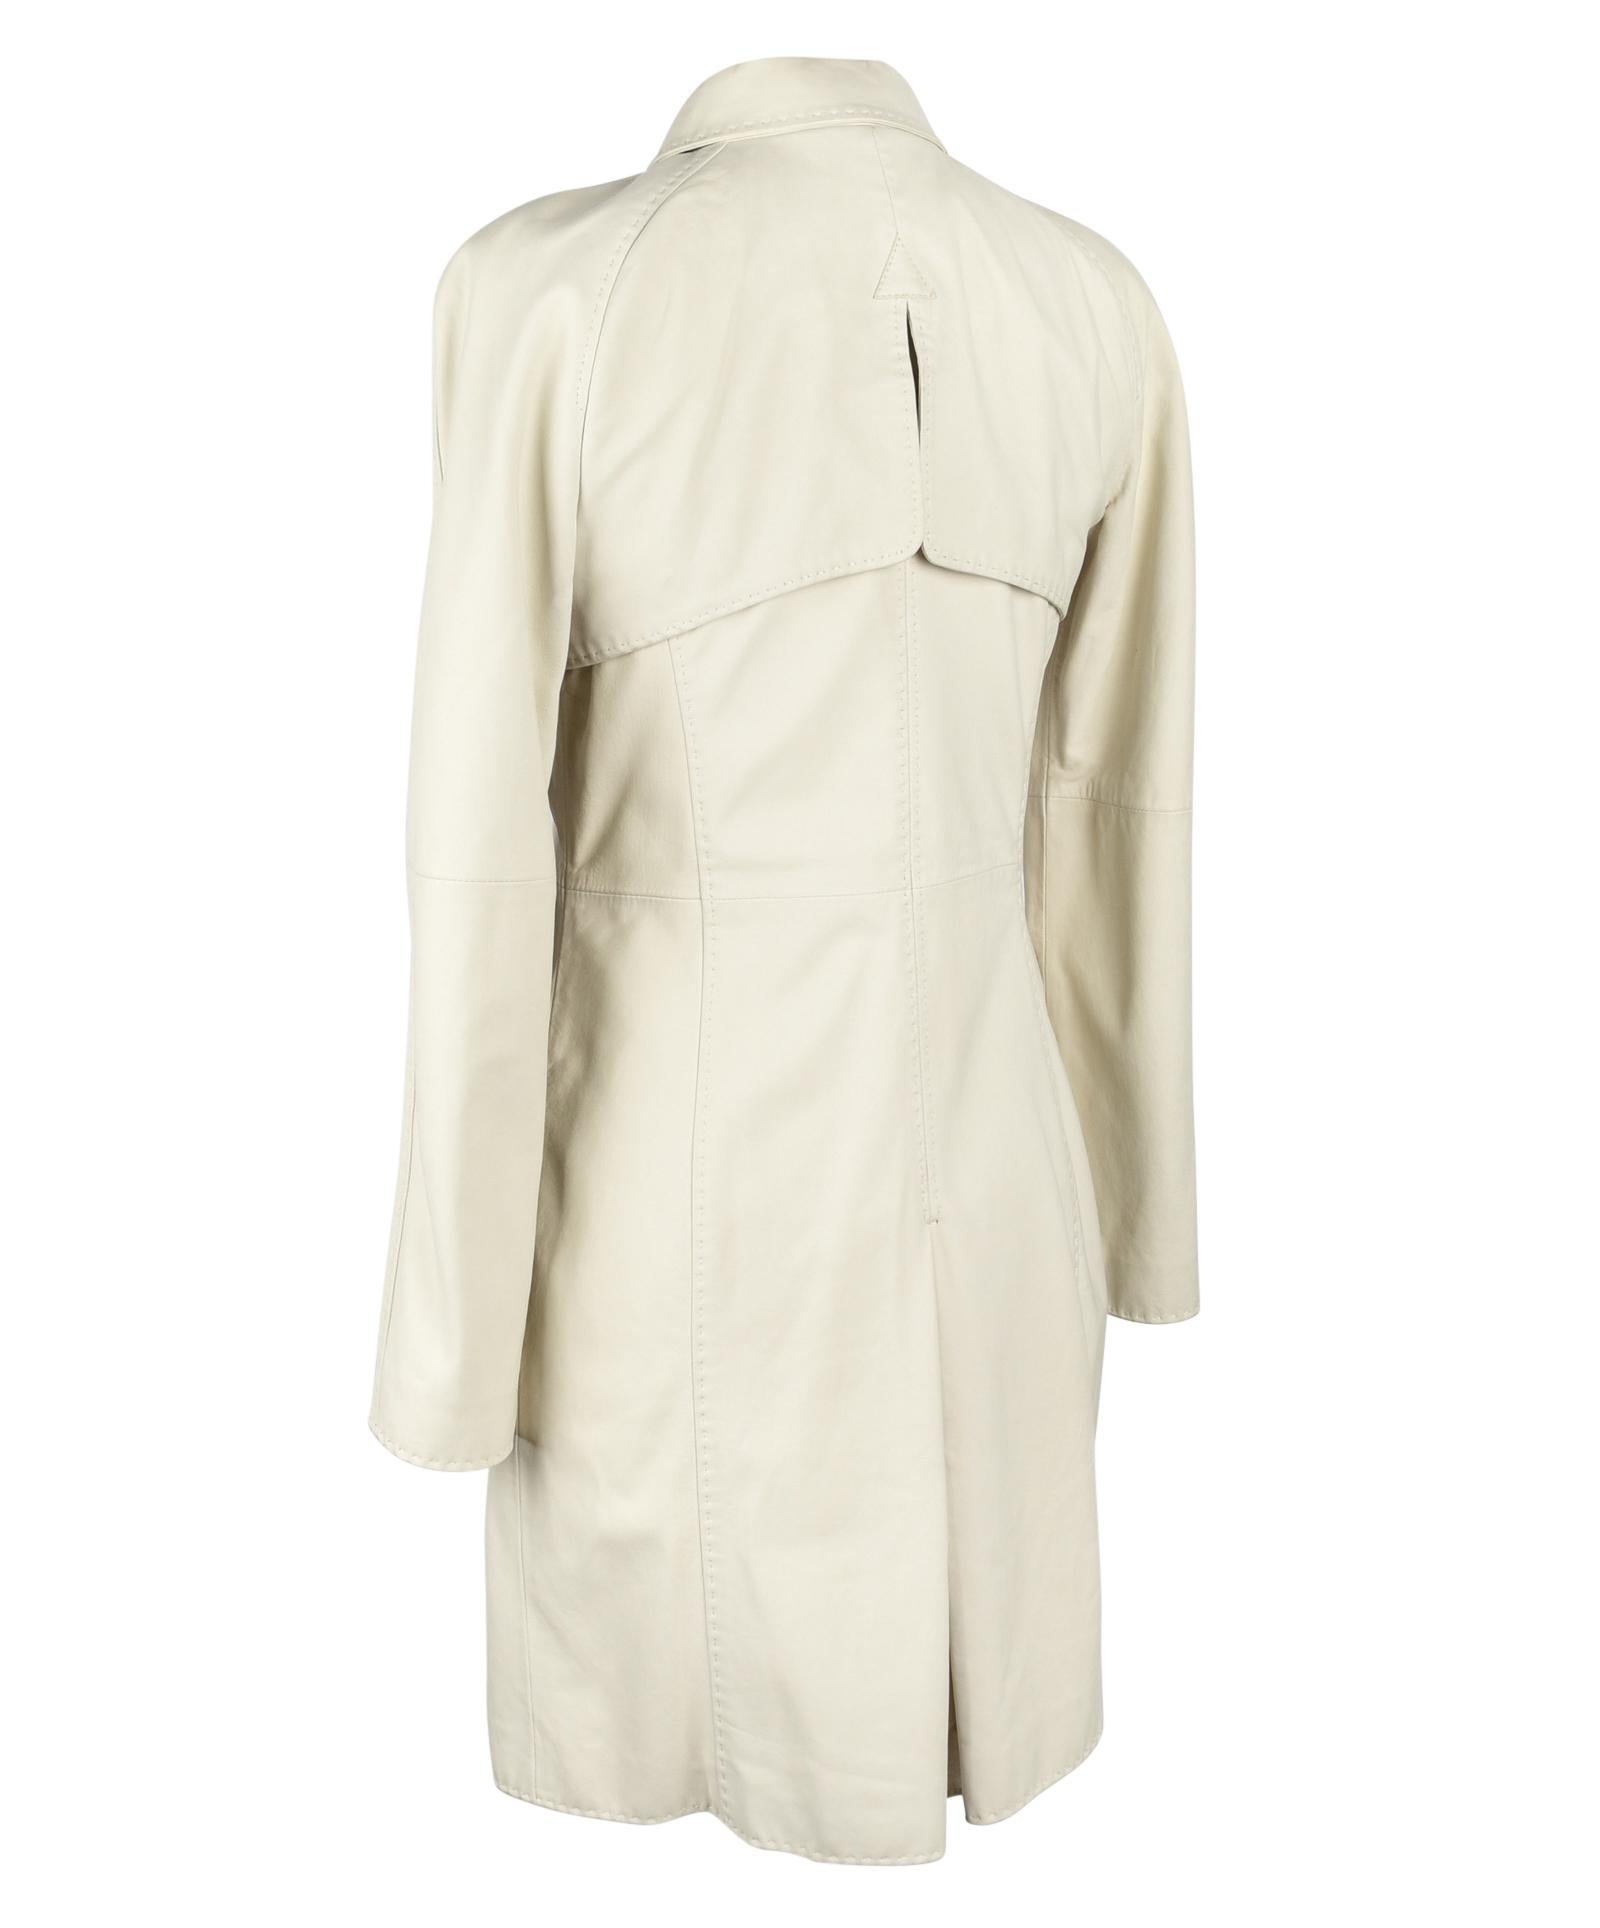 Giorgio Armani Coat Lambskin Leather Winter White 38 / 6 NWT 4